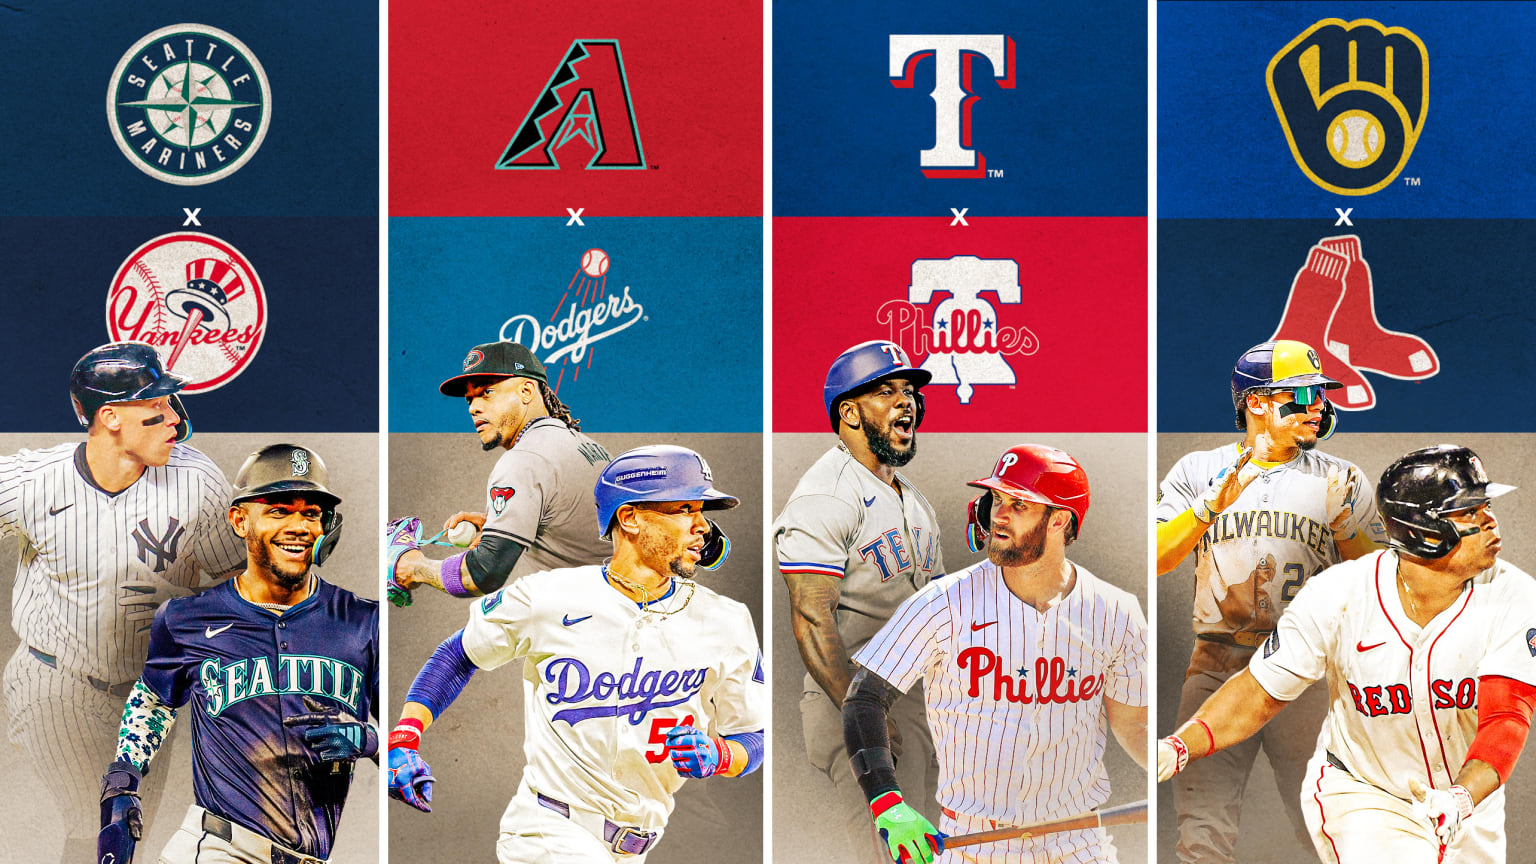 Mariners-Yankees, Diamondbacks-Dodgers, Rangers-Phillies, Brewers-Red Sox among series to watch this week